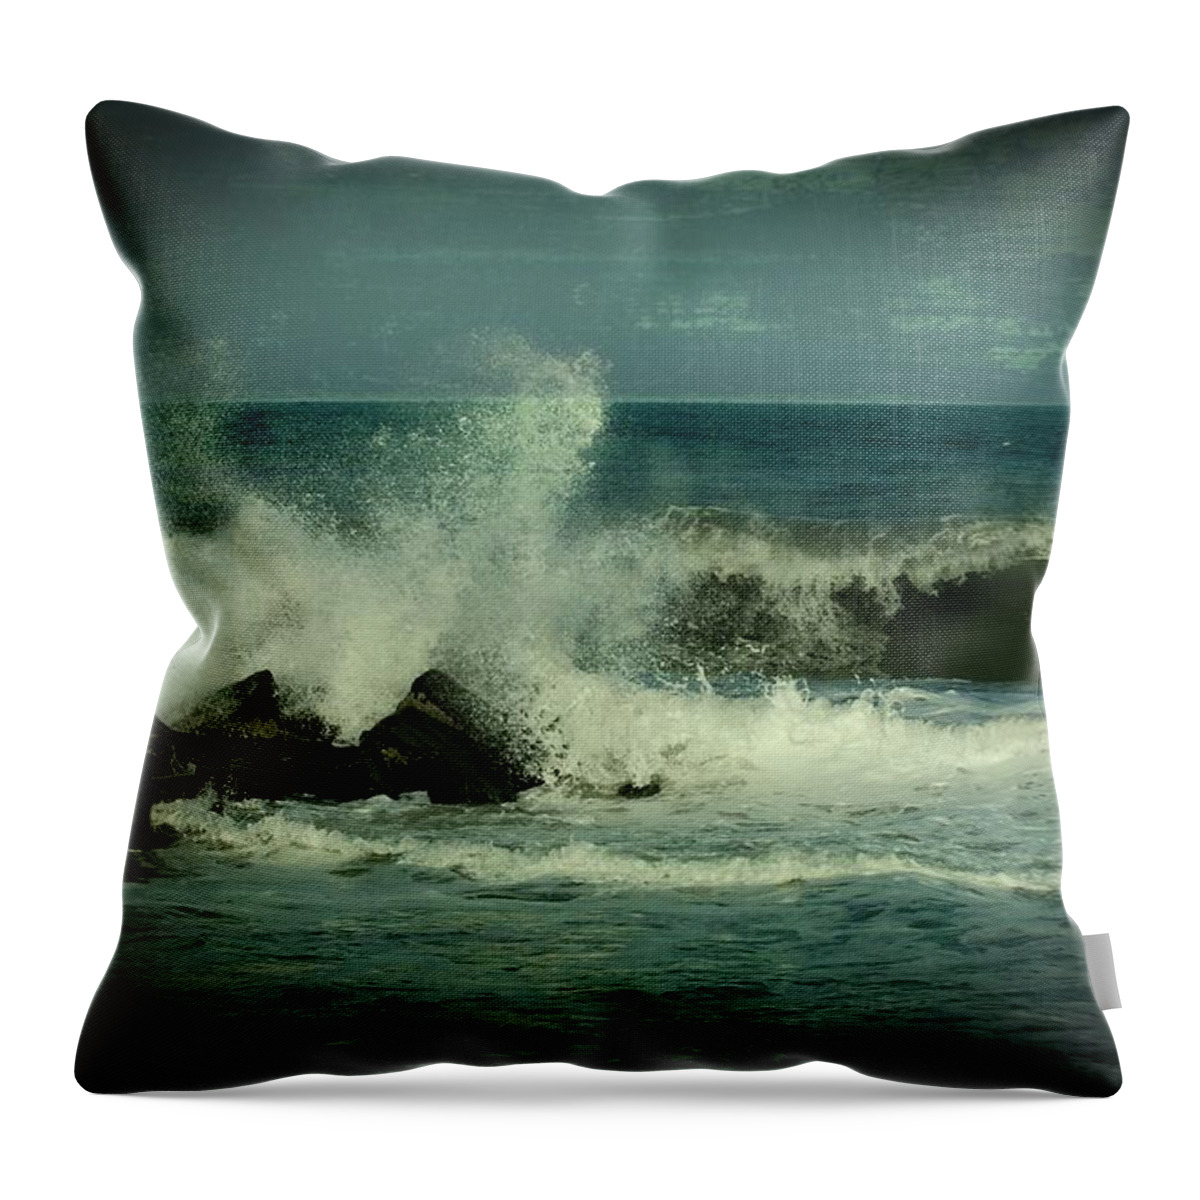 Jersey Shore Beaches Throw Pillow featuring the photograph Ocean Impact - Jersey Shore by Angie Tirado